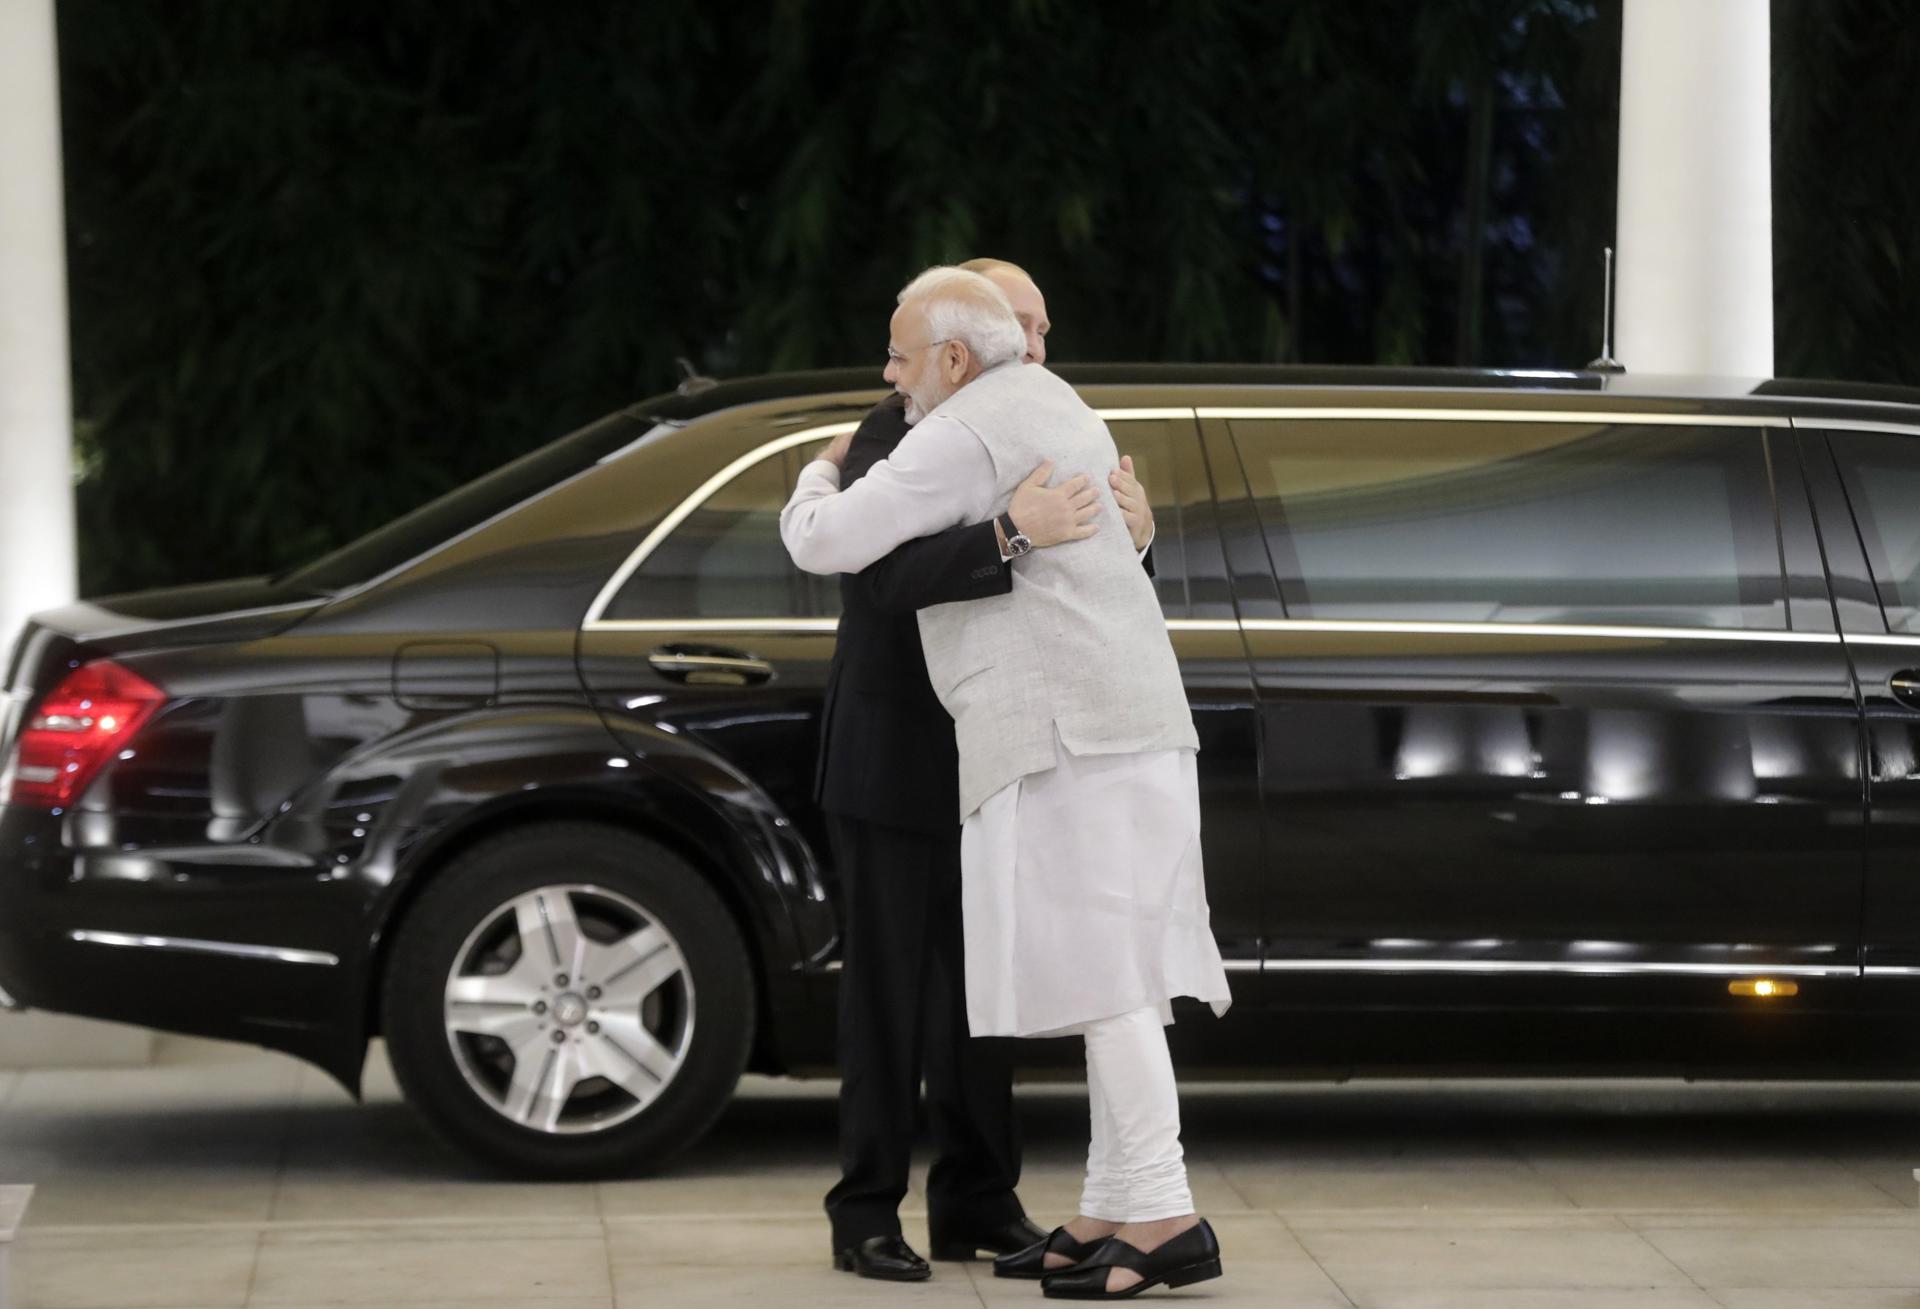 A file picture of Russian President Vladimir Putin (back) being welcomed by Indian Prime Minister Narendra Modi (front) in New Delhi, India, 04 October 2018. EPA/EFE/FILE/MIKHAIL METZEL / KREMLIN POOL/SPUTNIK / POOL MANDATORY CREDIT[MANDATORY CREDIT]